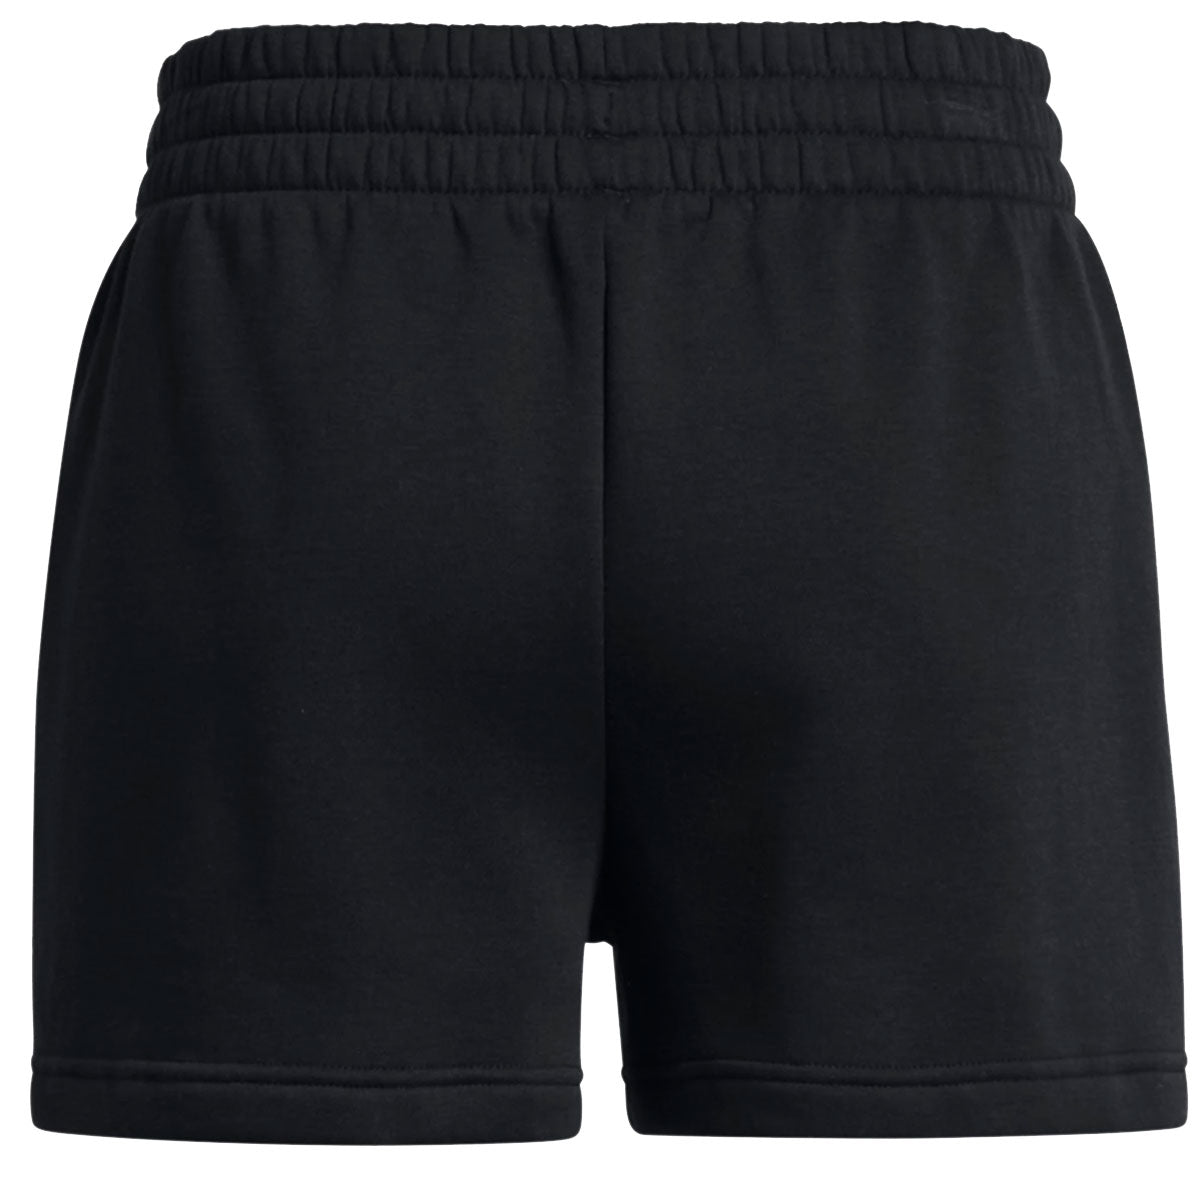 Under Armour Rival Fleece Shorts - Womens - Black/White